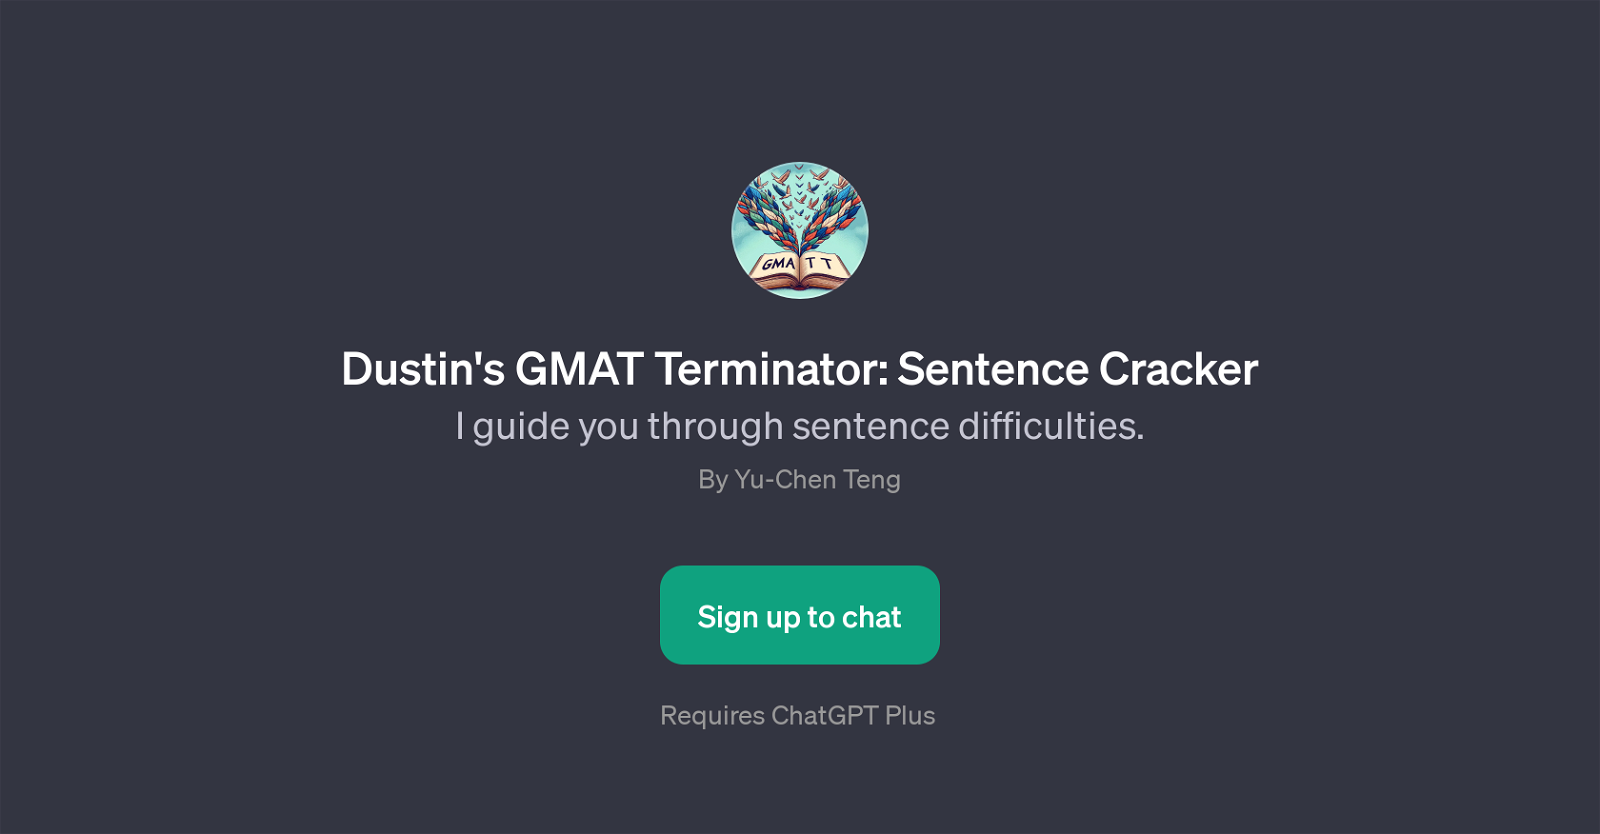 Dustin's GMAT Terminator: Sentence Cracker website